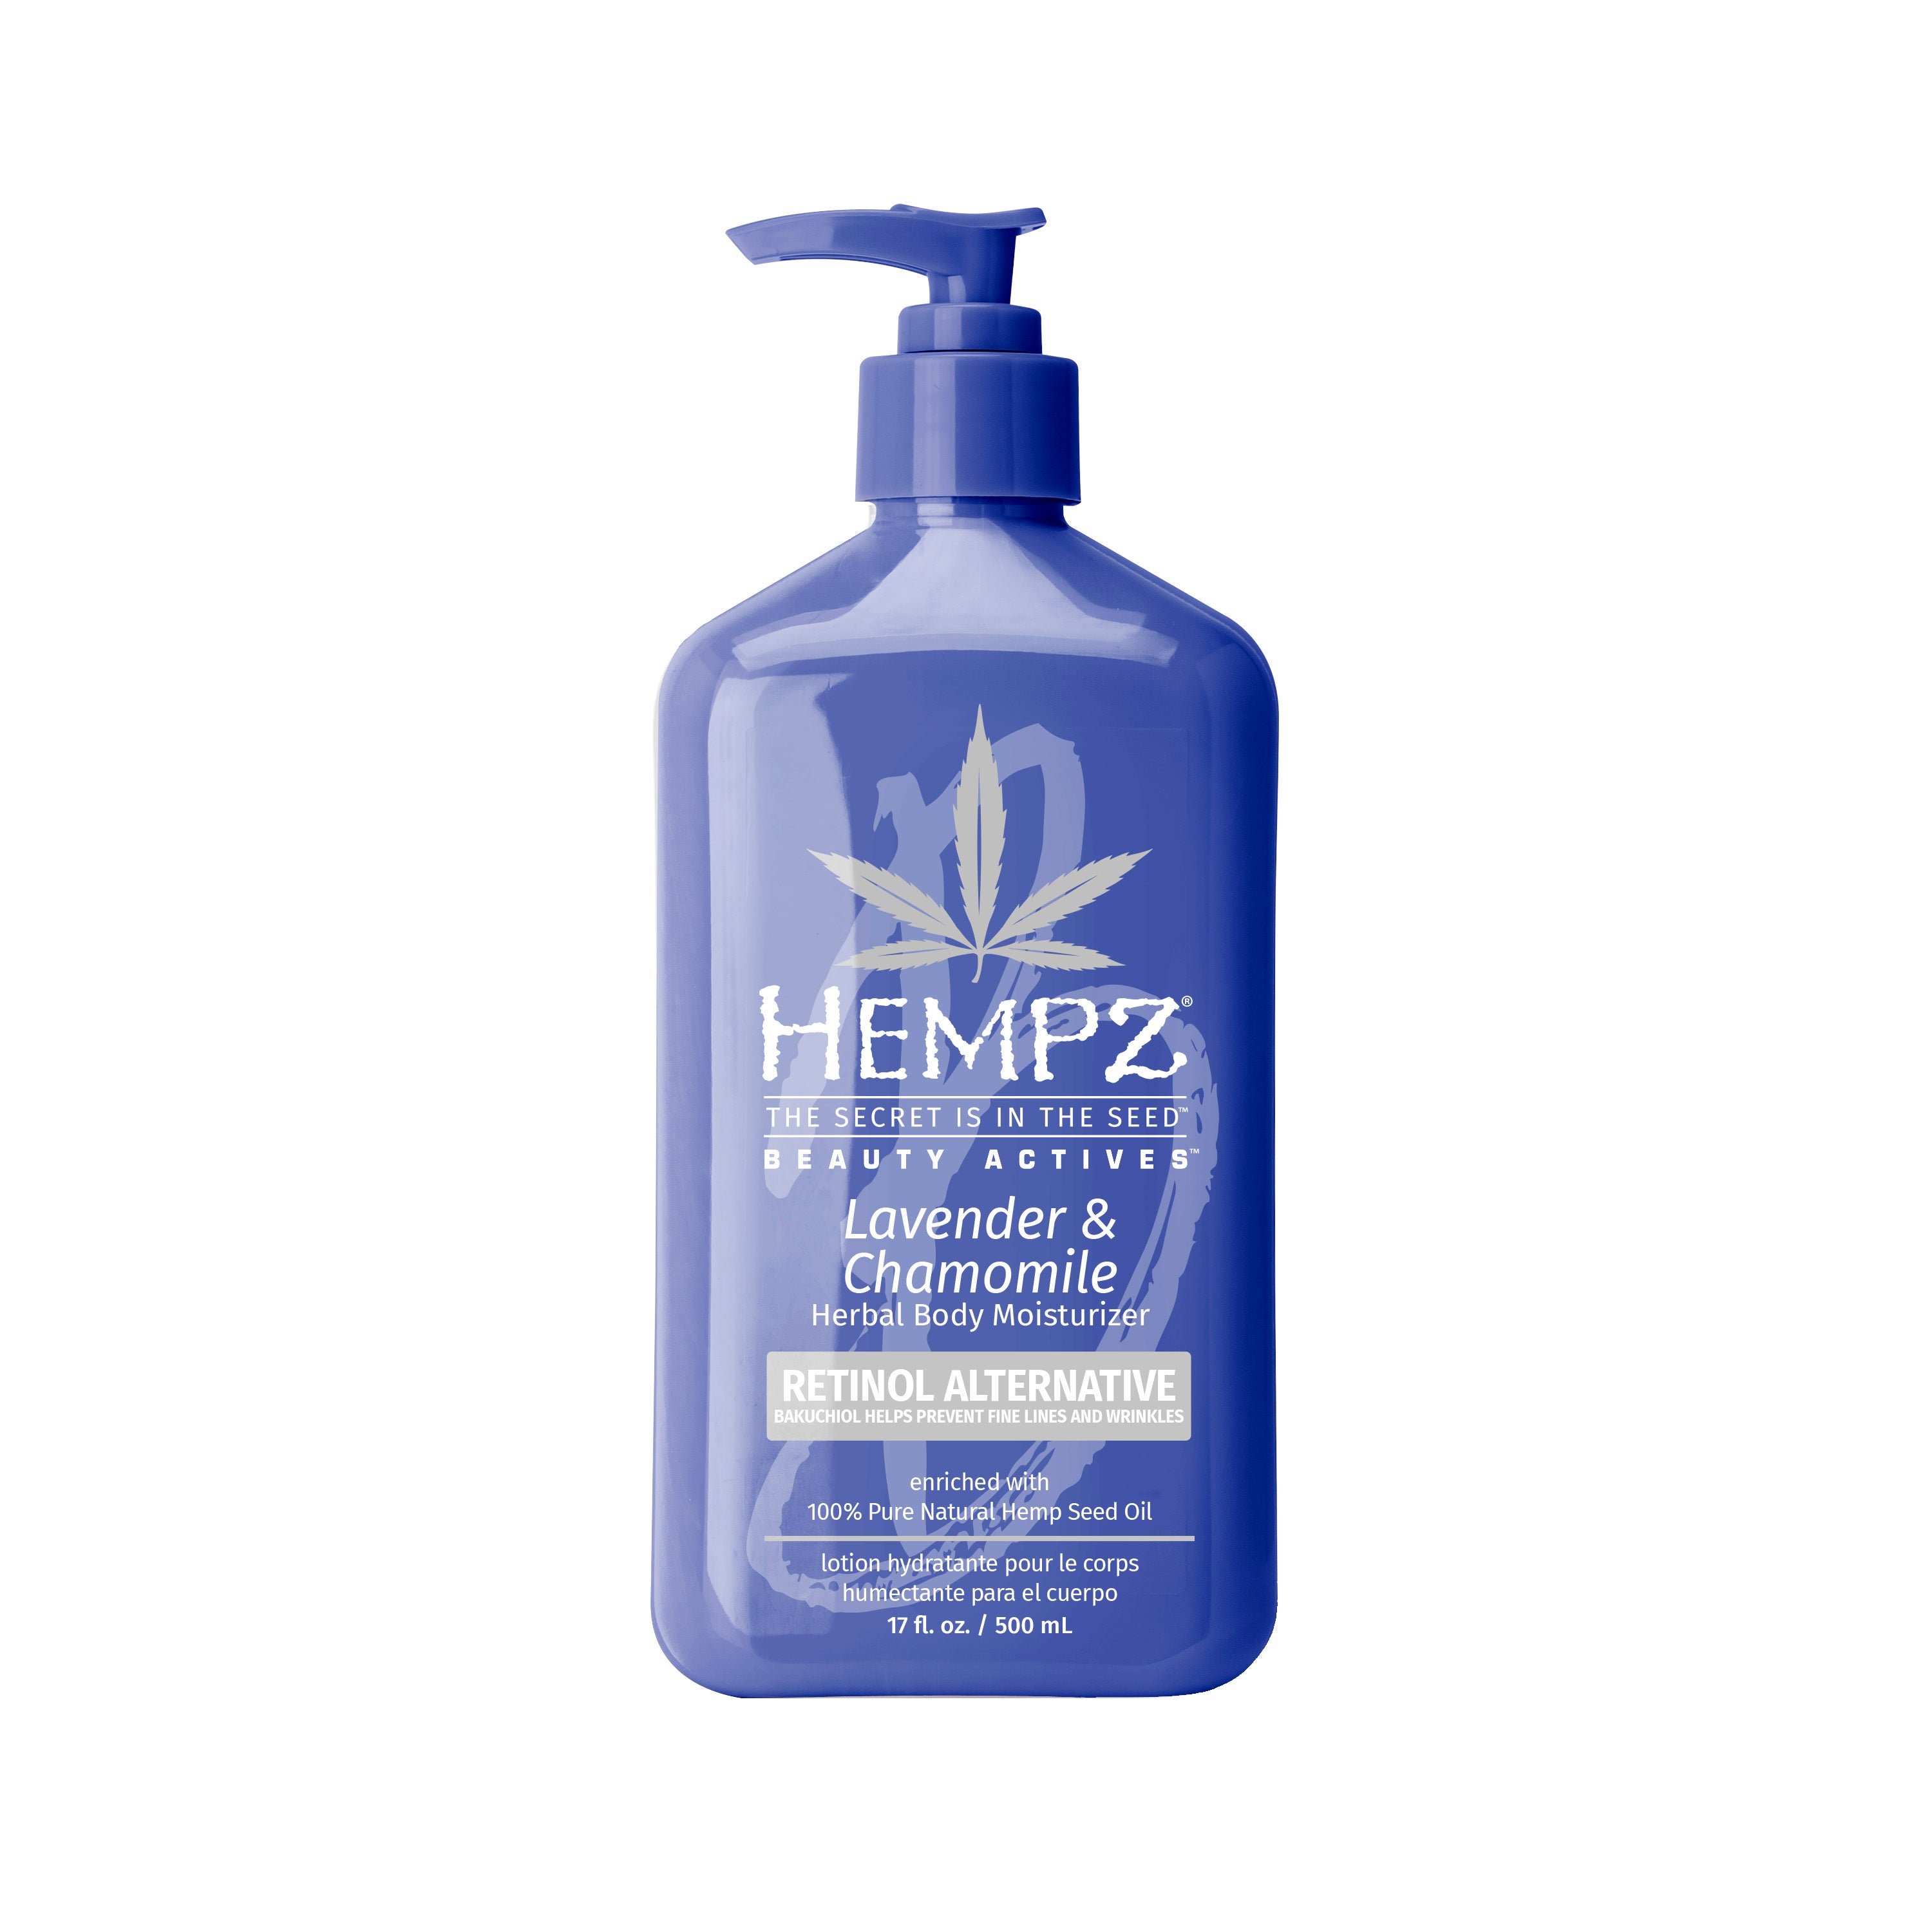 Hempz - Lavender & Chamomile Herbal Body Moisturizer - Creata Beauty - Professional Beauty Products